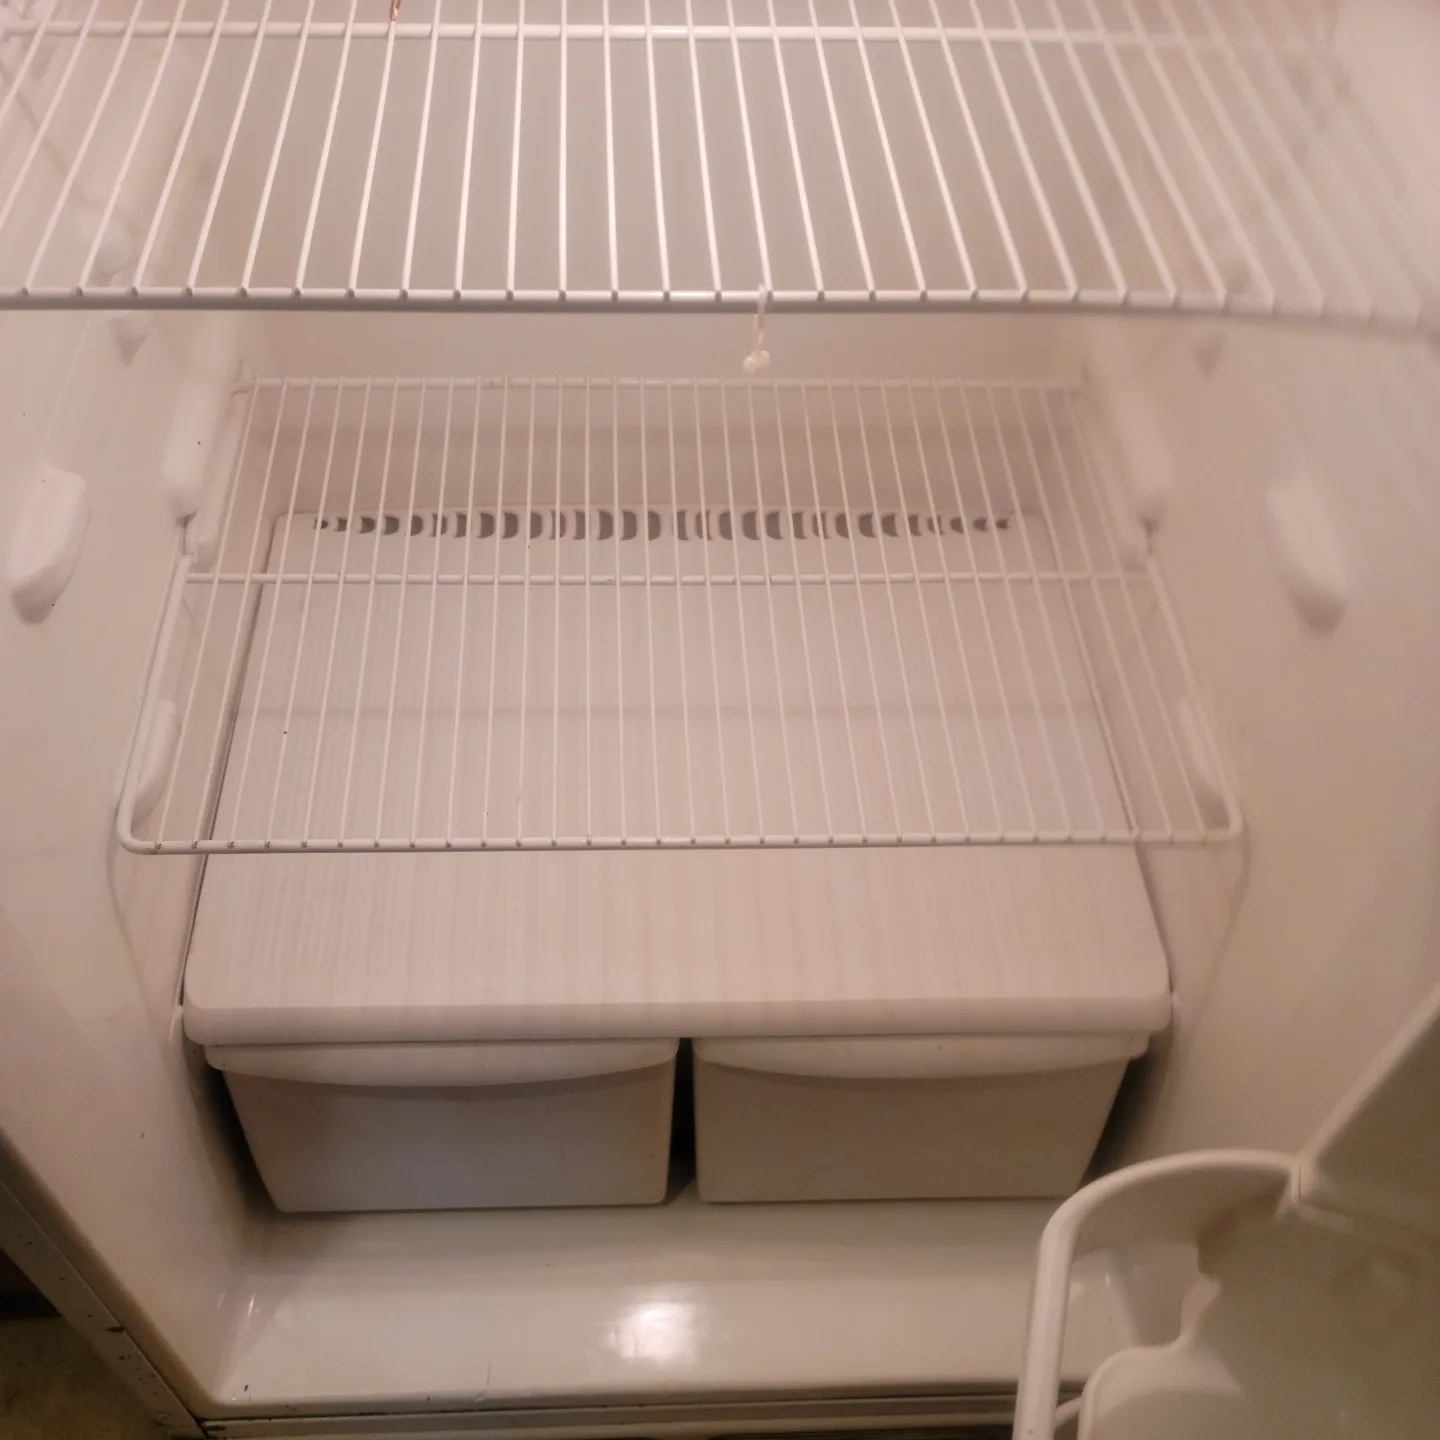 Cleaned white interiors of a fridge